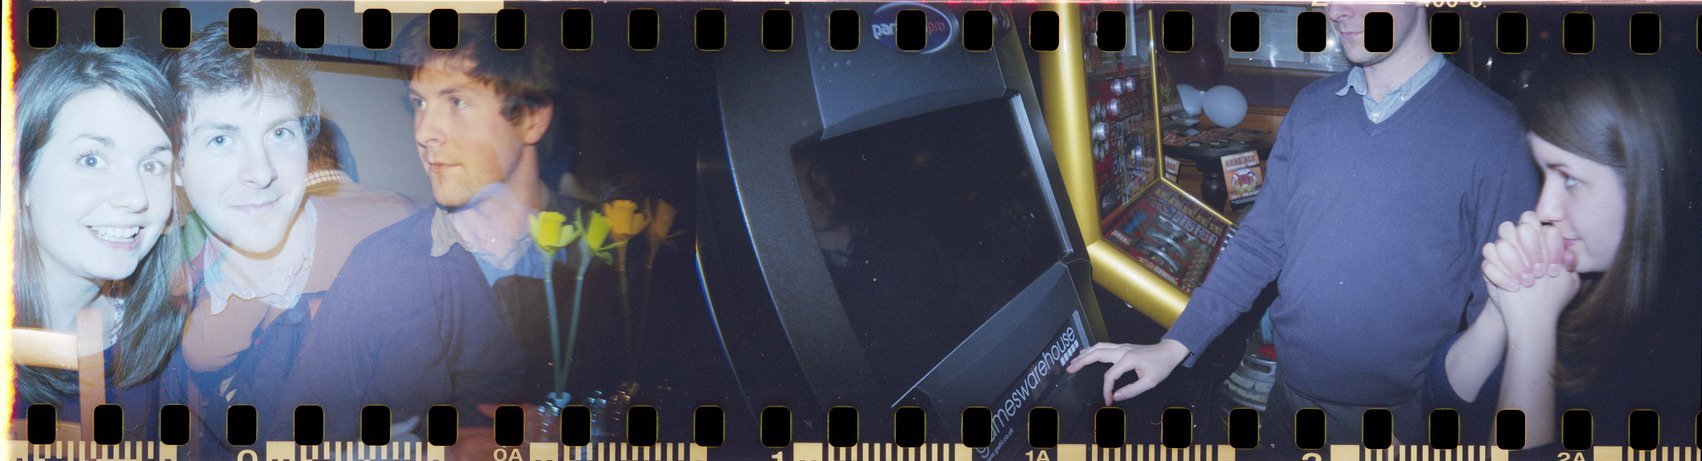 Lomography Digitaliza - 35mm Film Scanning Mask - Analogue Wonderland - 3